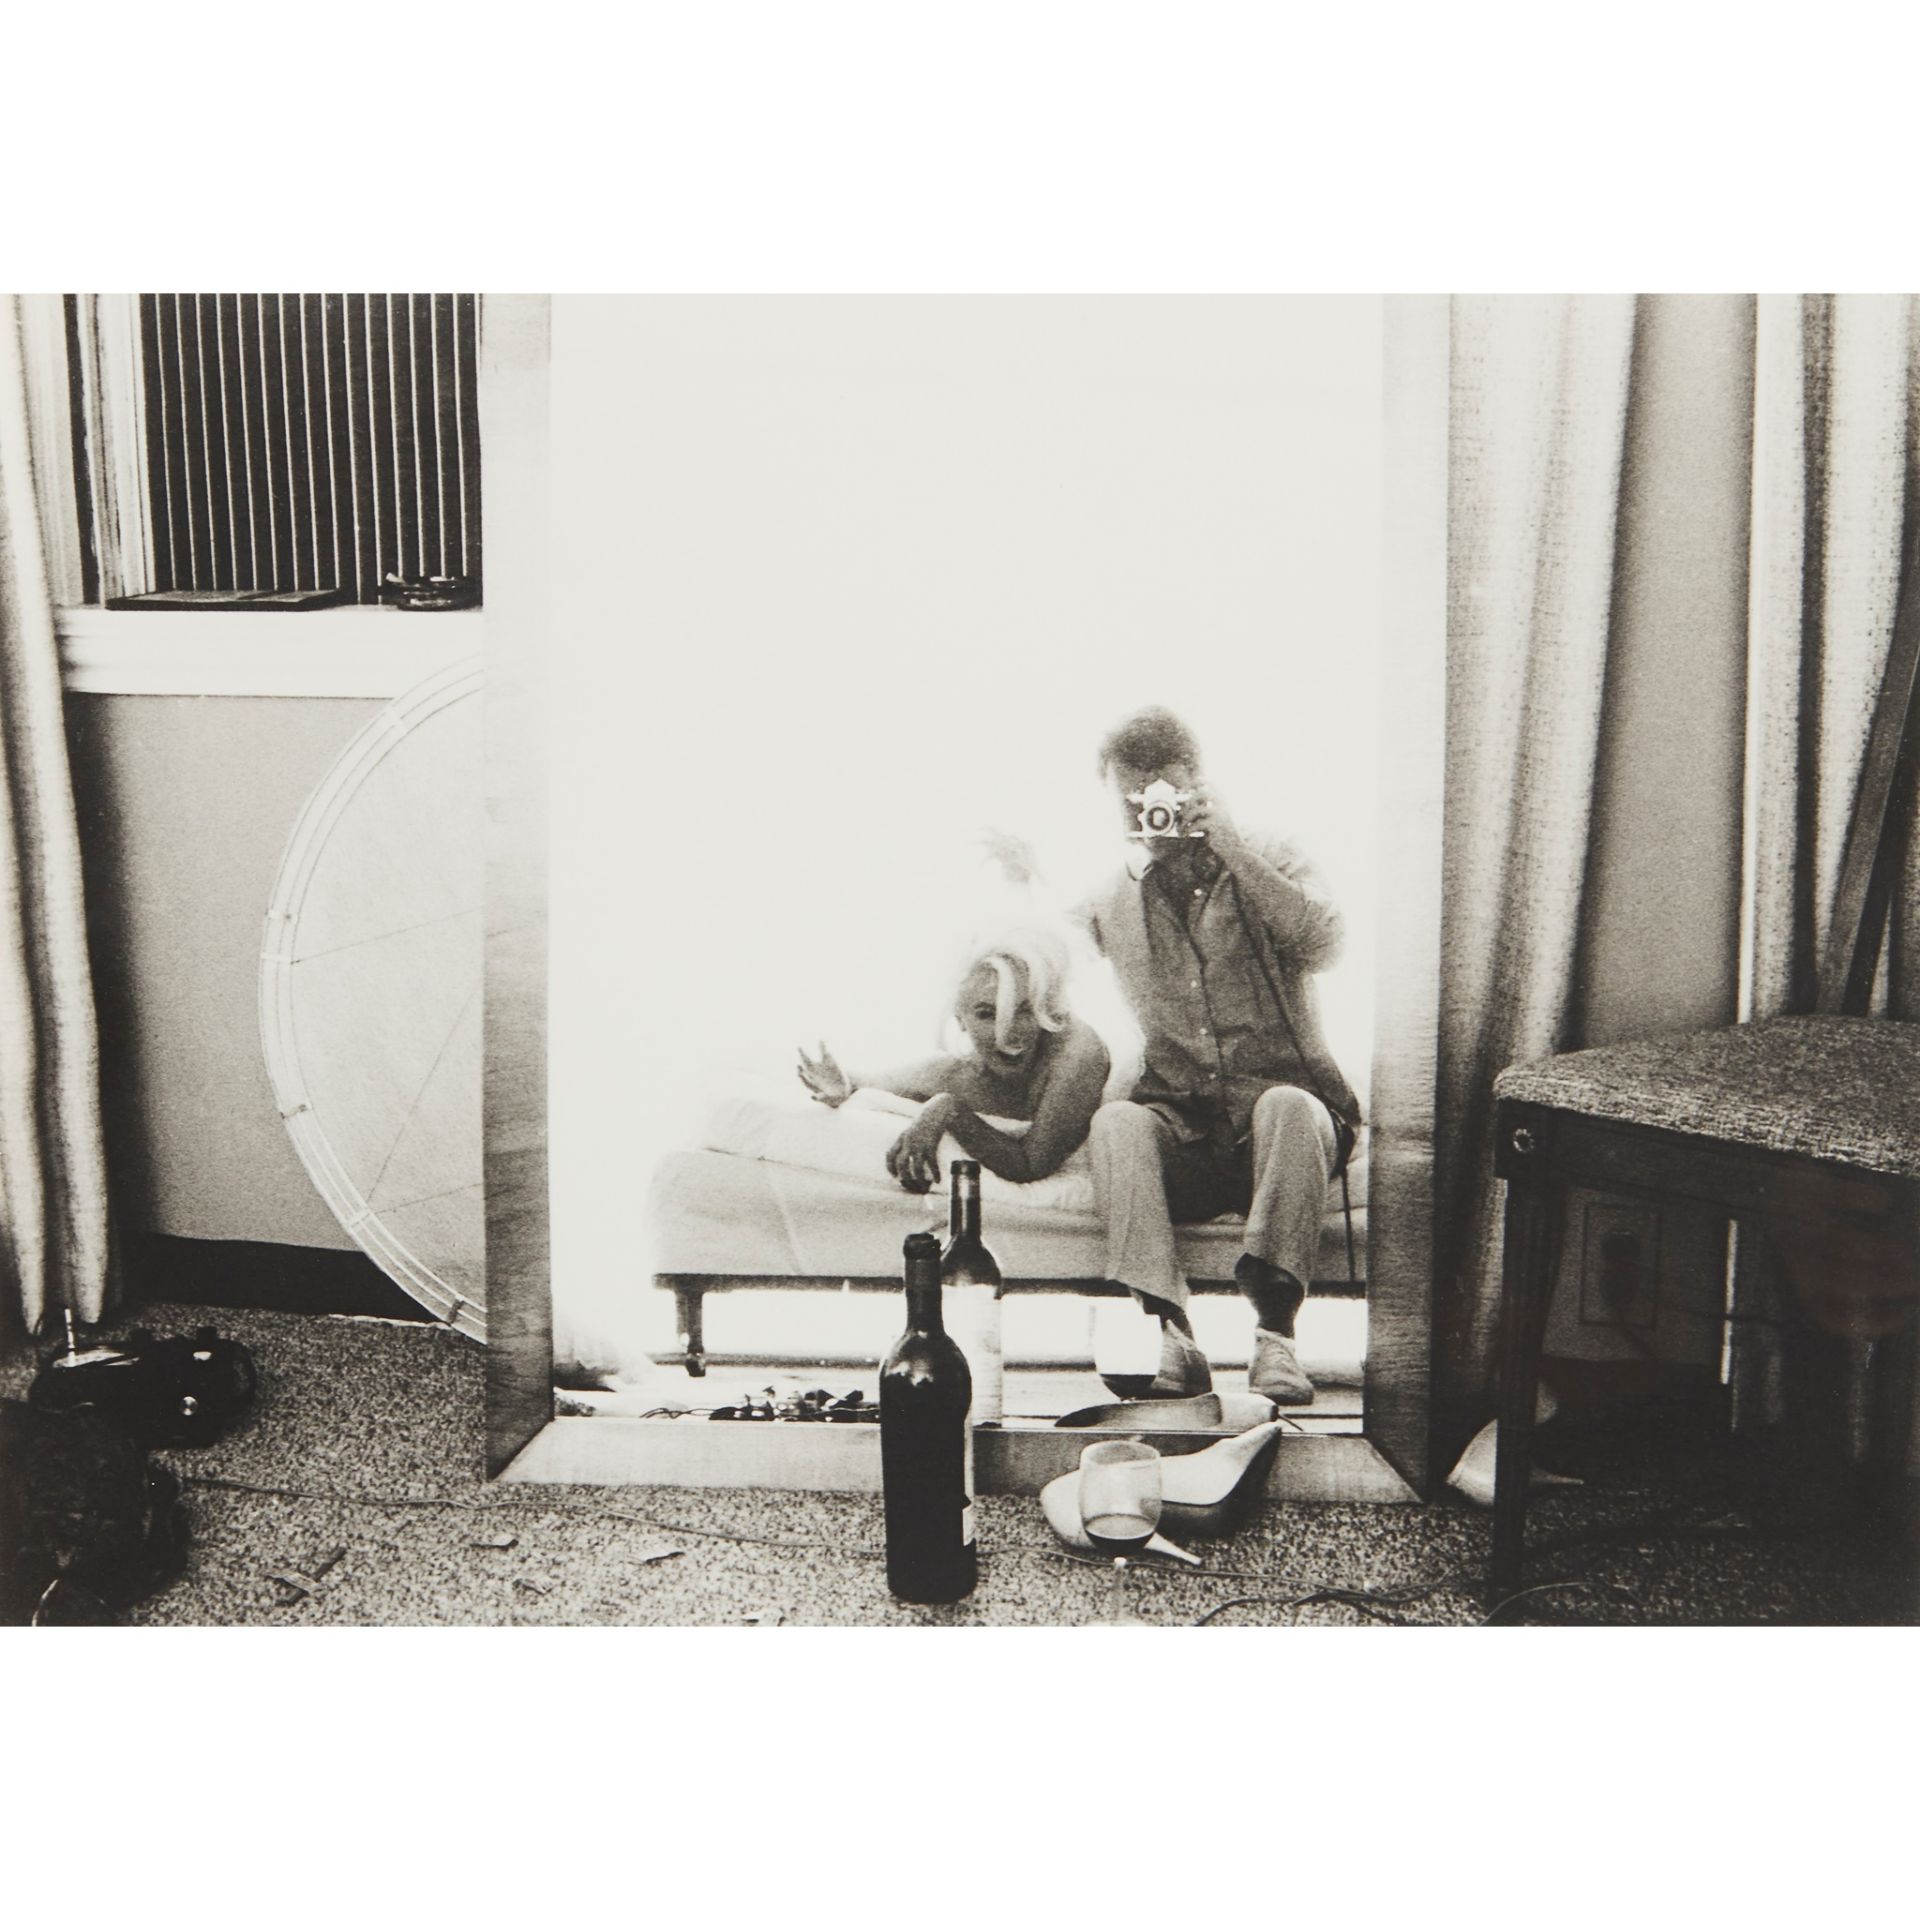 BERT STERN (AMERICAN 1929-2013) SELF-PORTRAIT WITH MARILYN MONROE (FROM THE LAST SITTING) - 1962